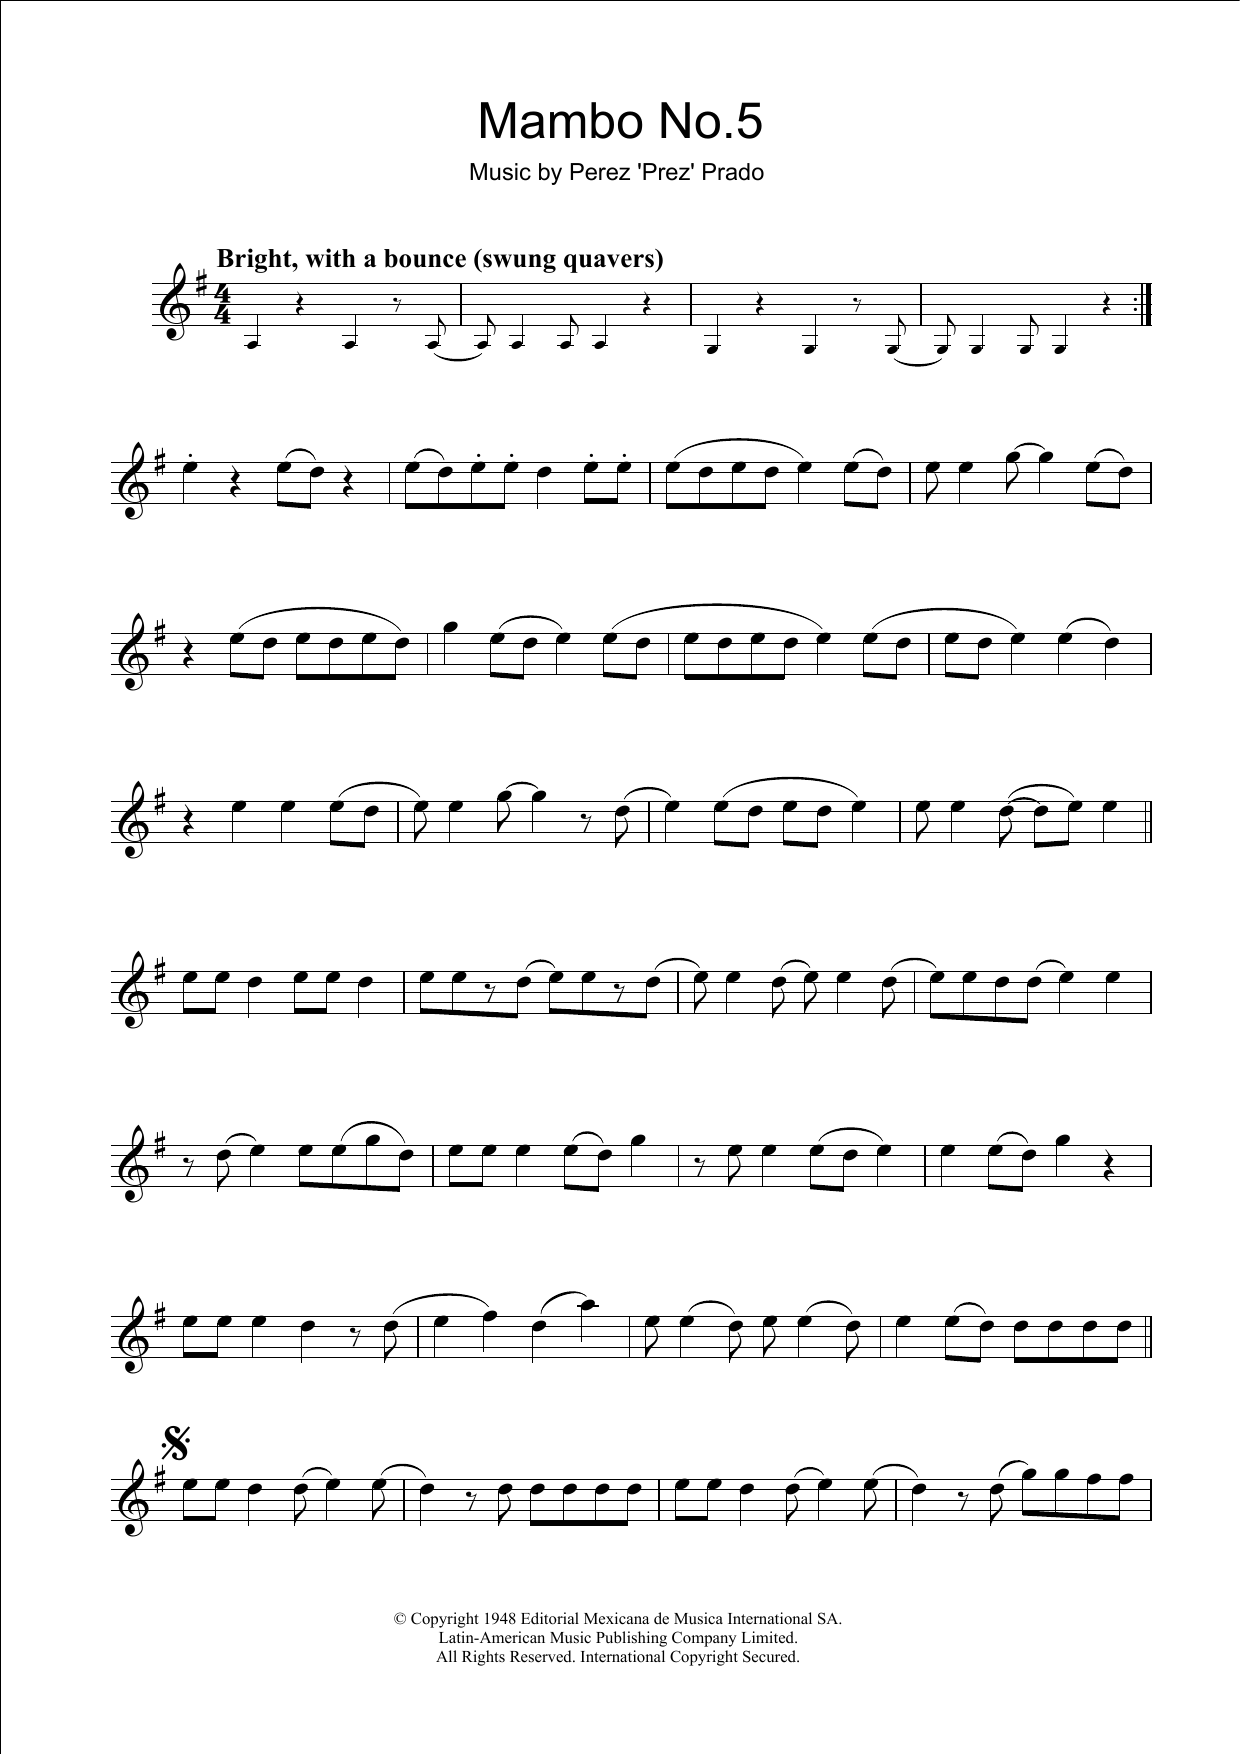 Perez Prado Mambo No. 5 Sheet Music Notes & Chords for Easy Piano - Download or Print PDF